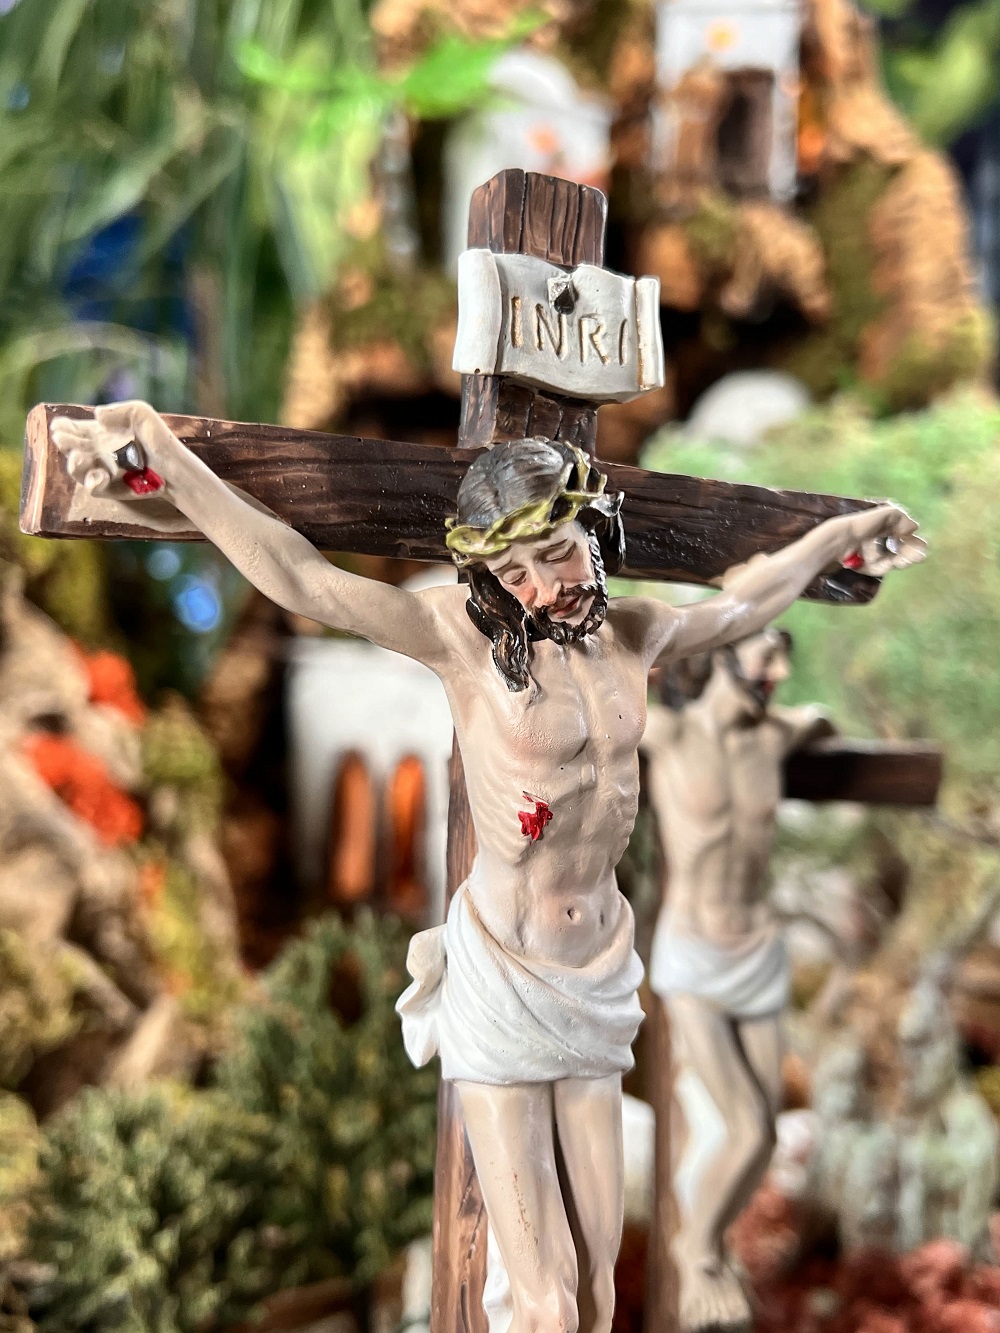 inri on Jesus' crucifix